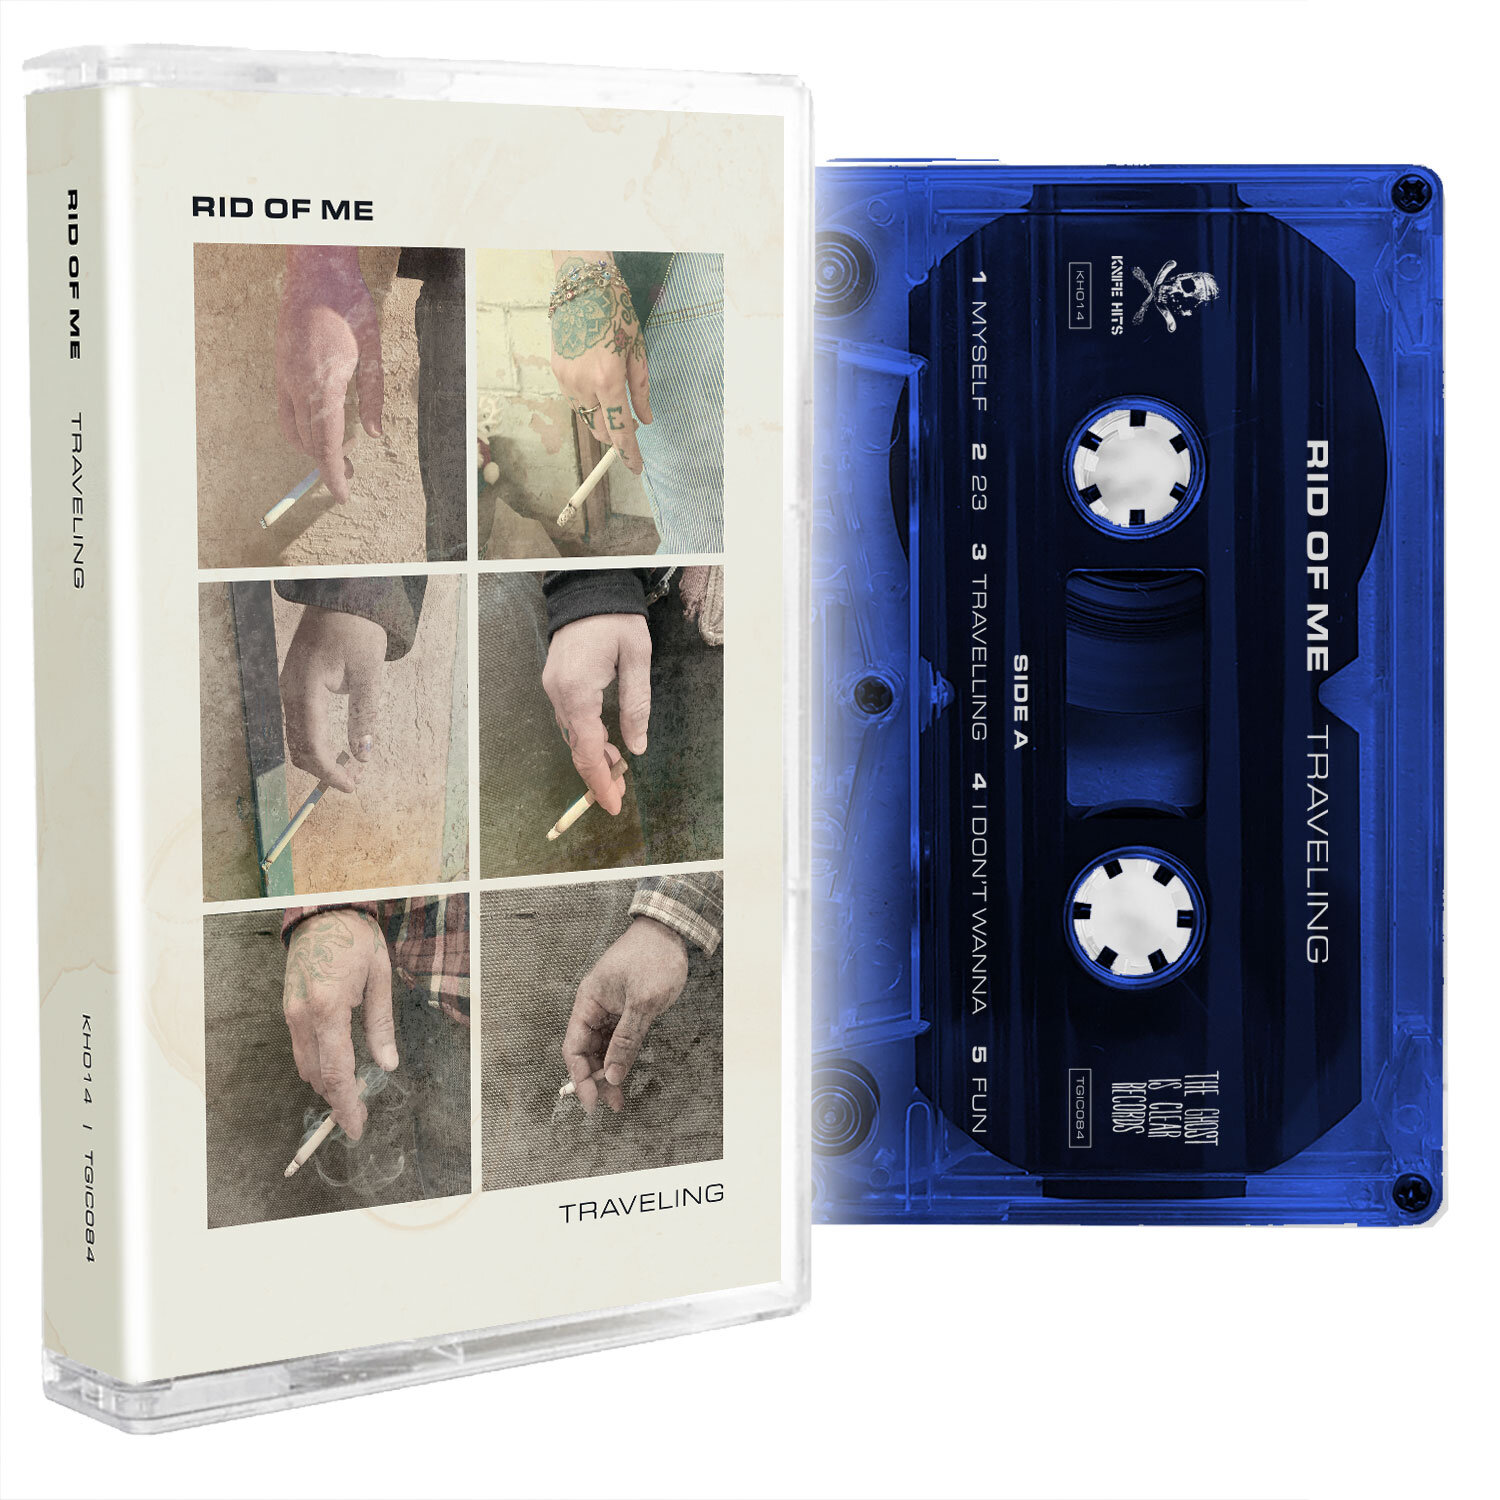 Rid Of Me - Traveling cassette